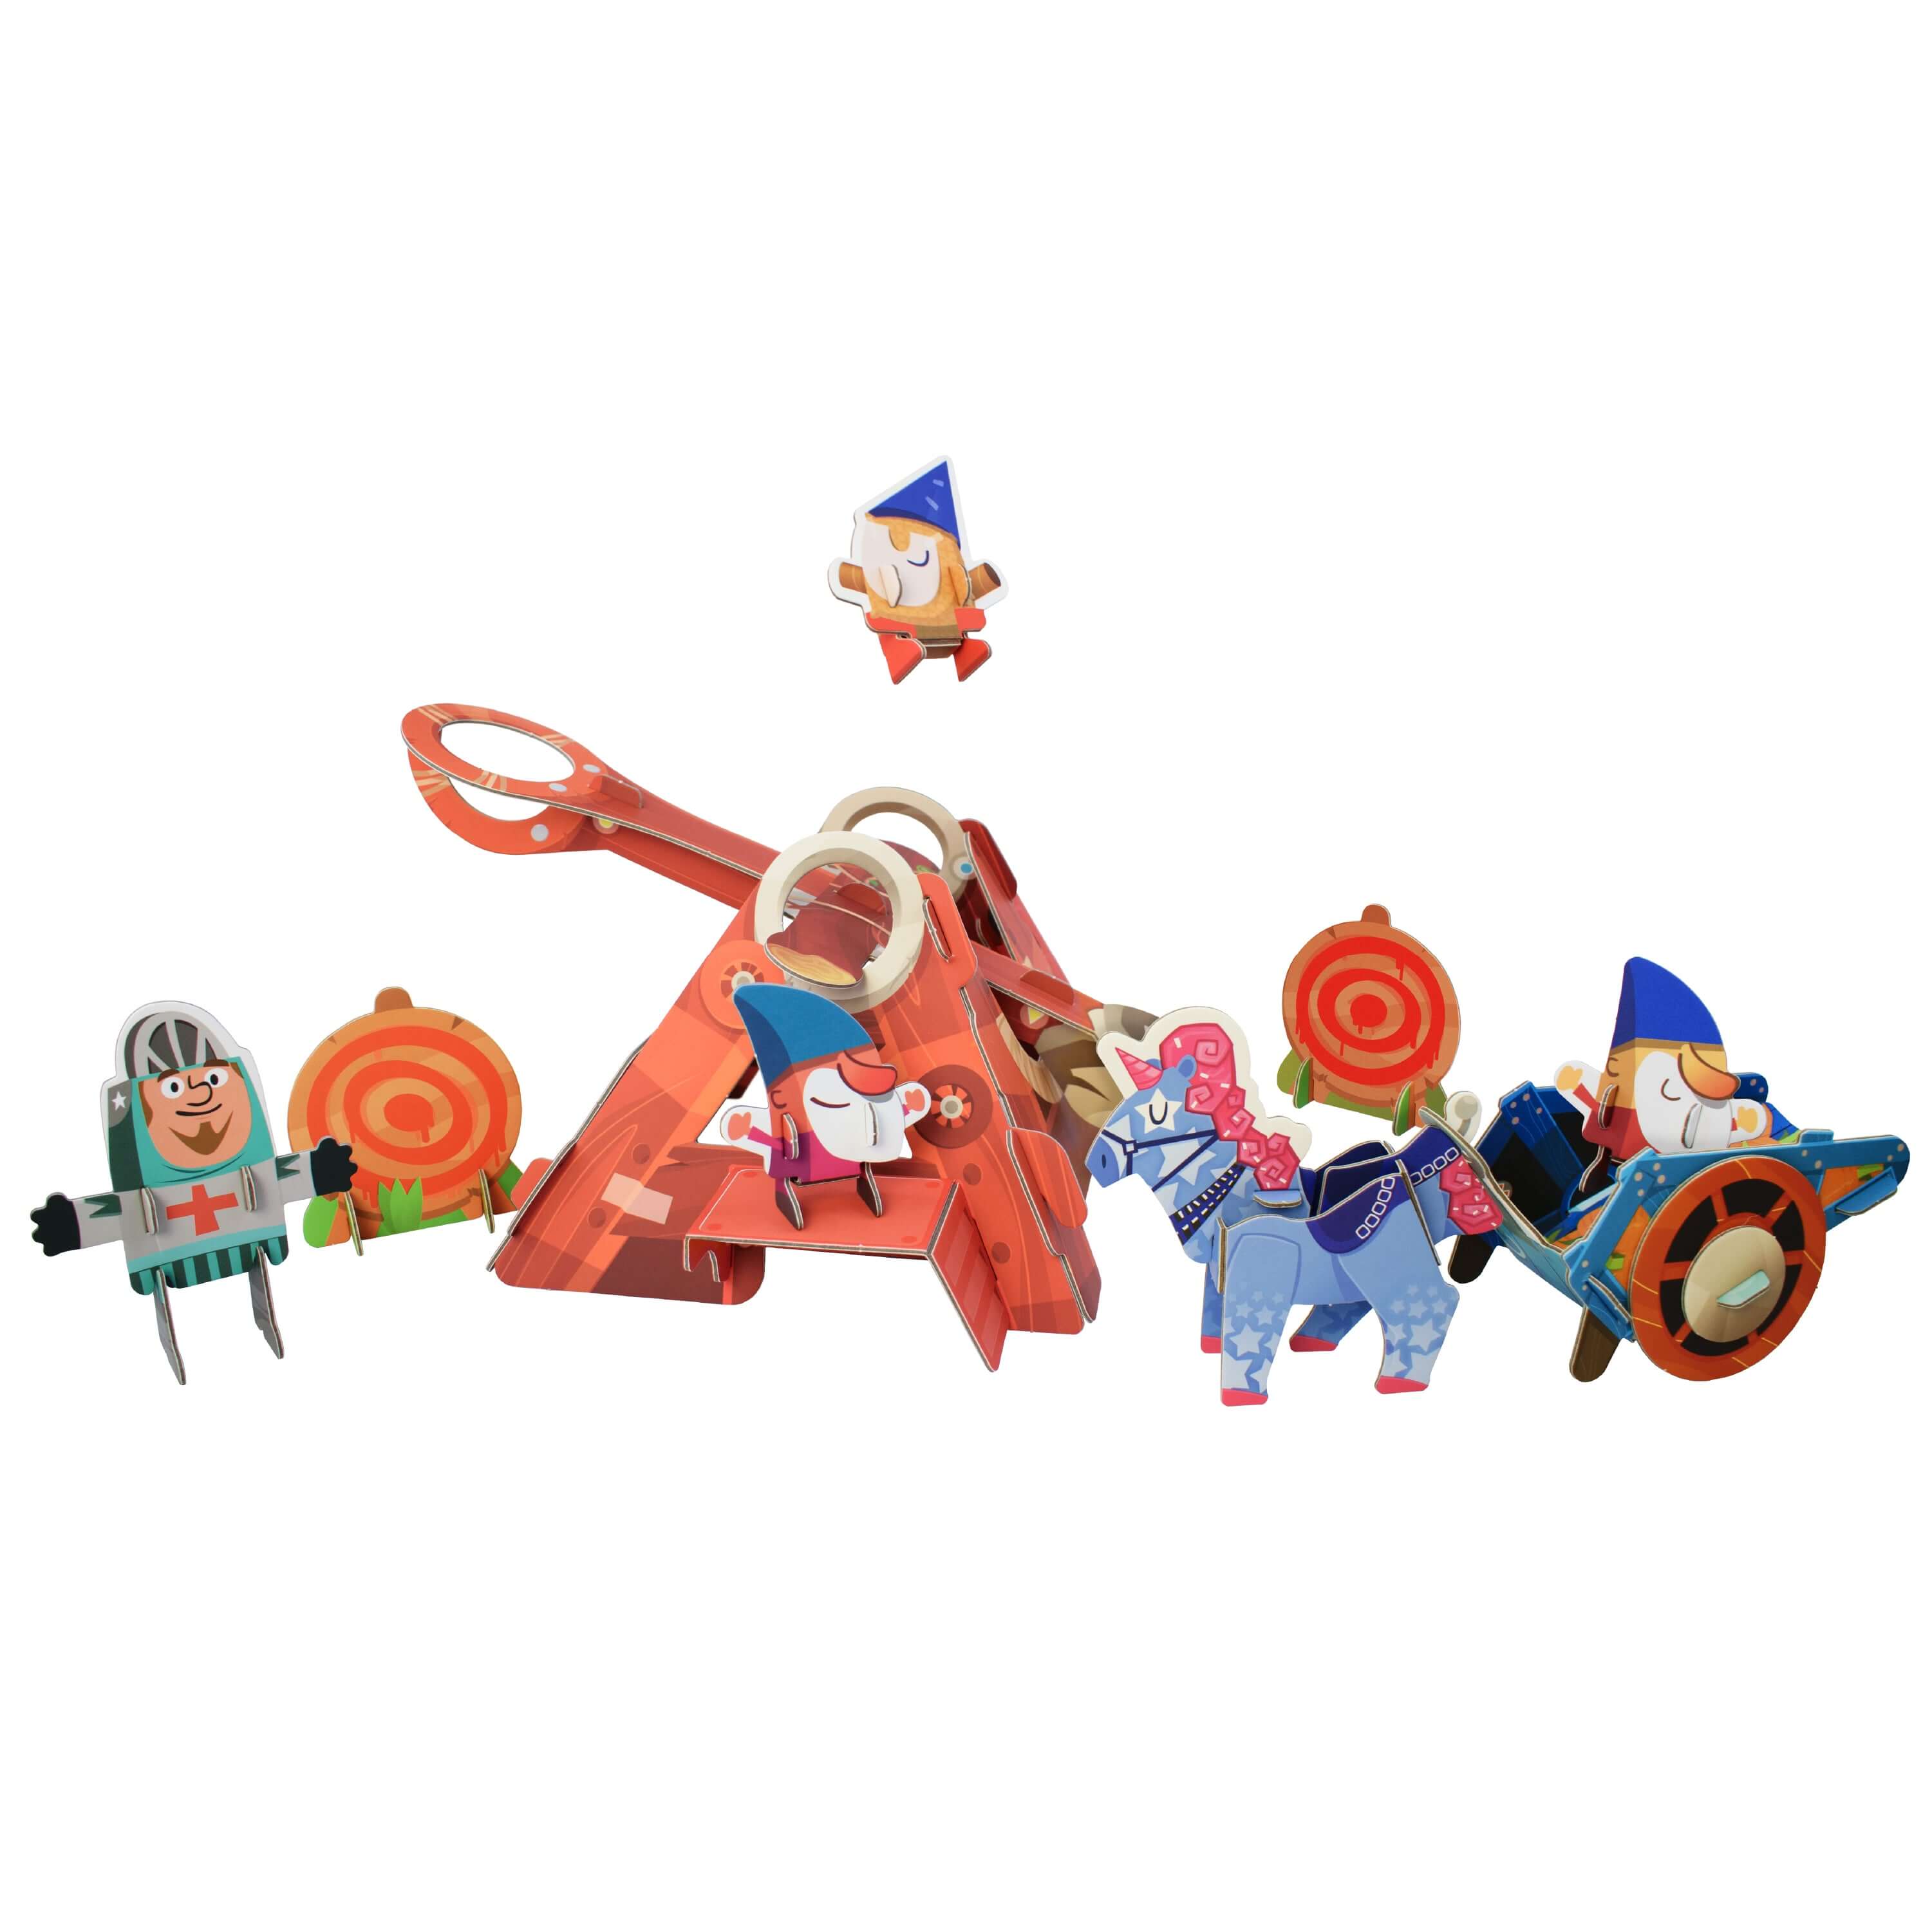 Curious Kingdom Gnome Catapult Playset